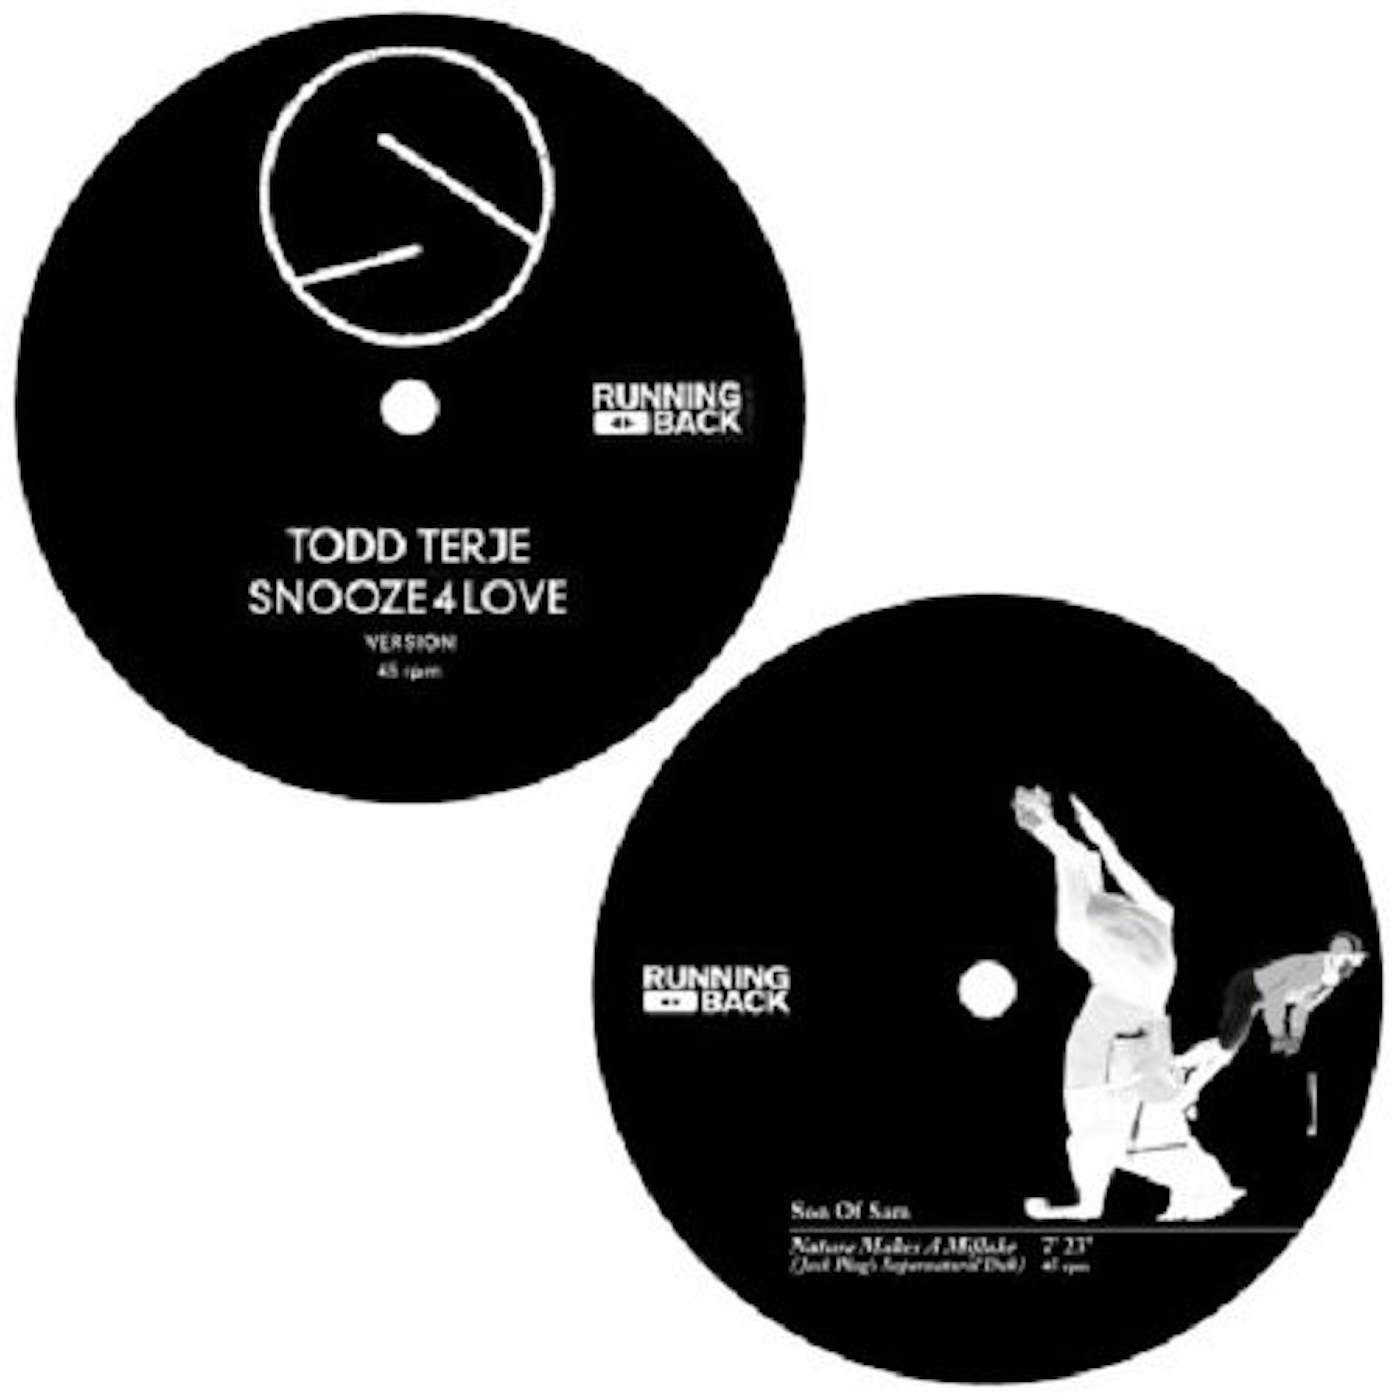 Todd / Son Of Sam Terje DIGITAL DUBPLATES Vinyl Record